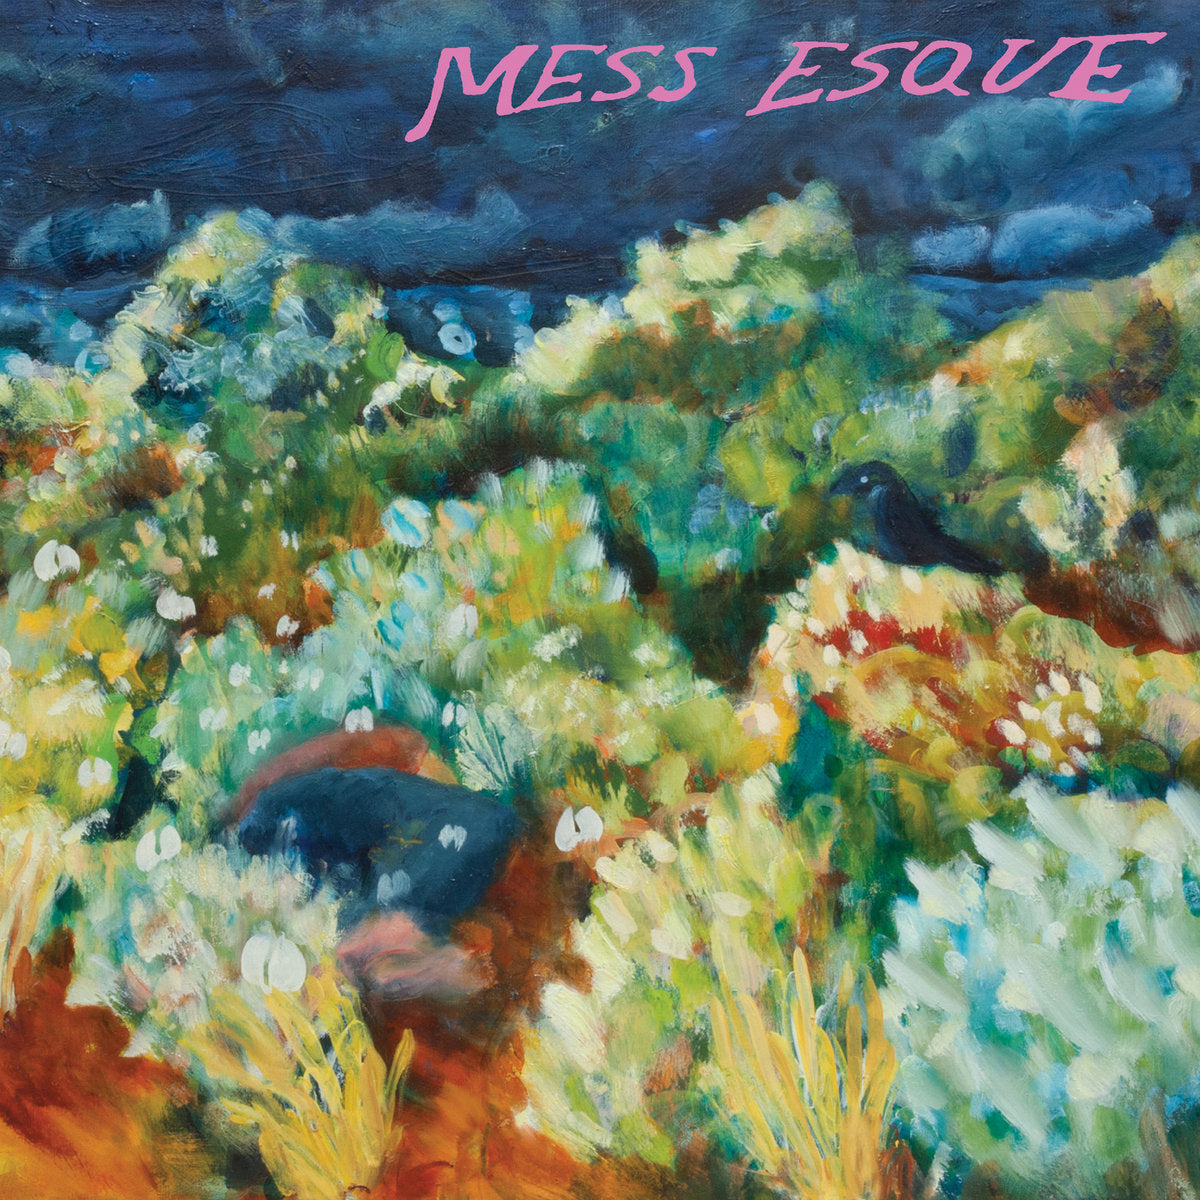 MESS ESQUE - Mess Esque - LP - Vinyl